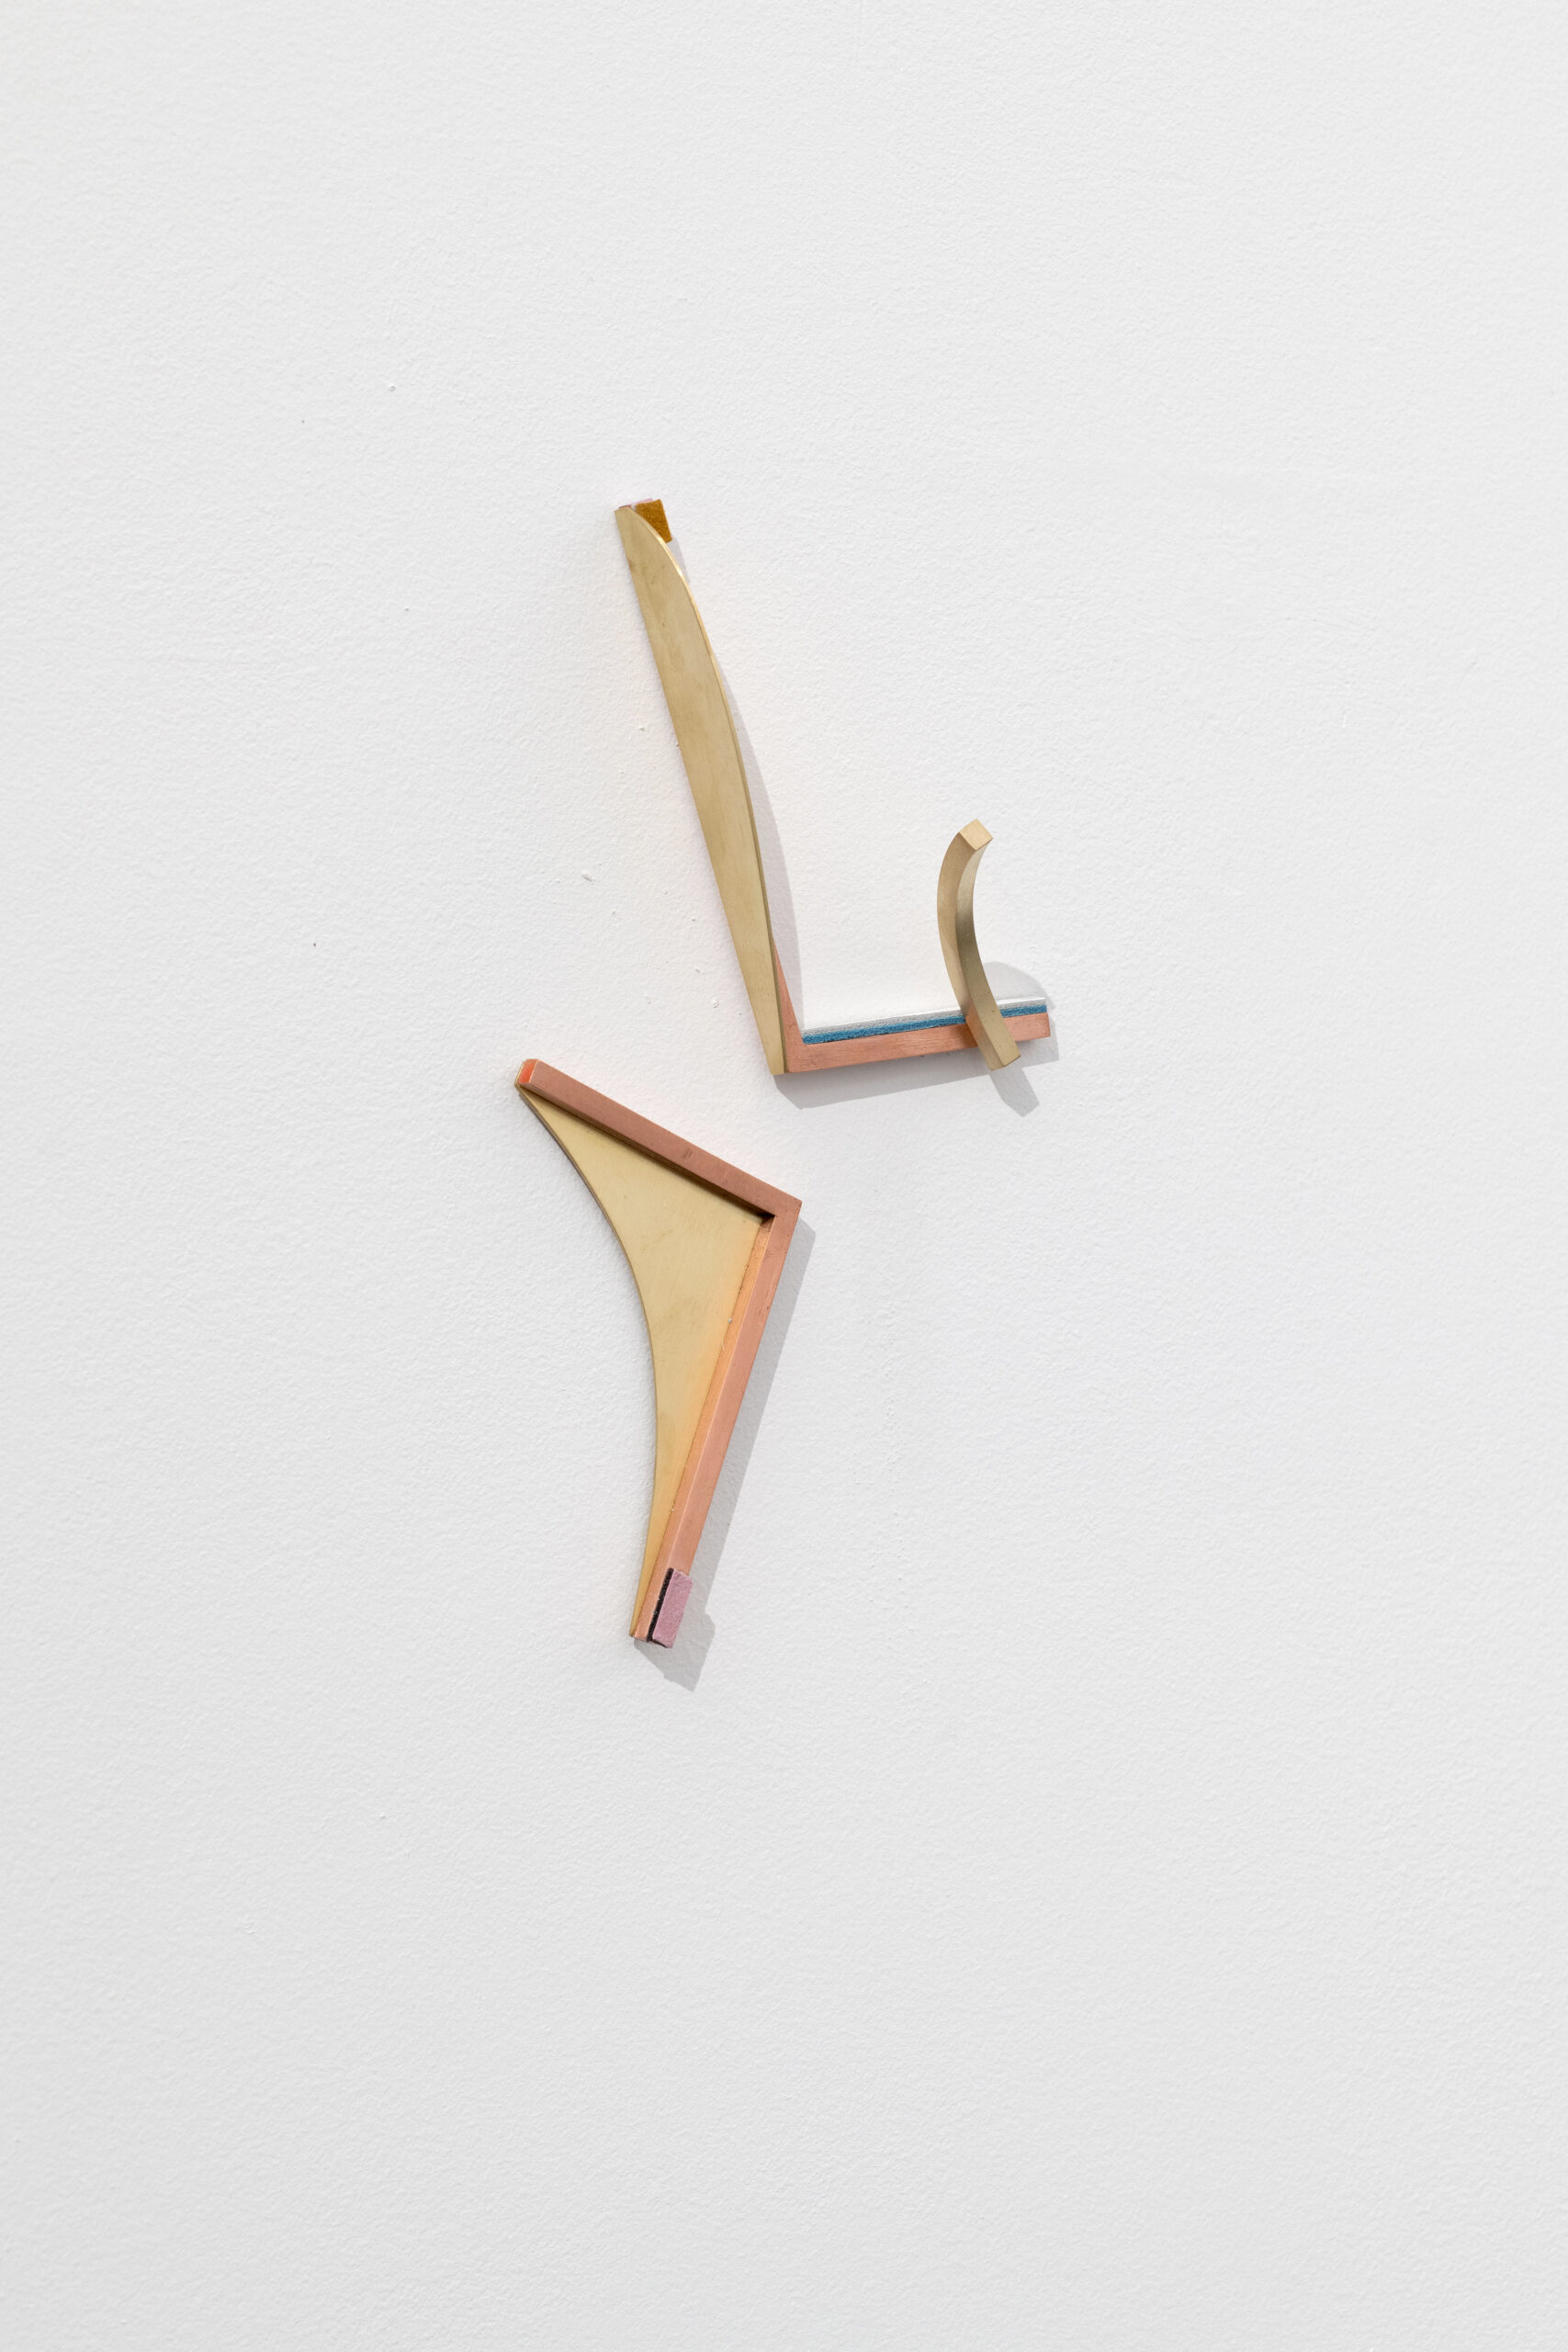 Galerie Lange + Pult – Henrik Eiben